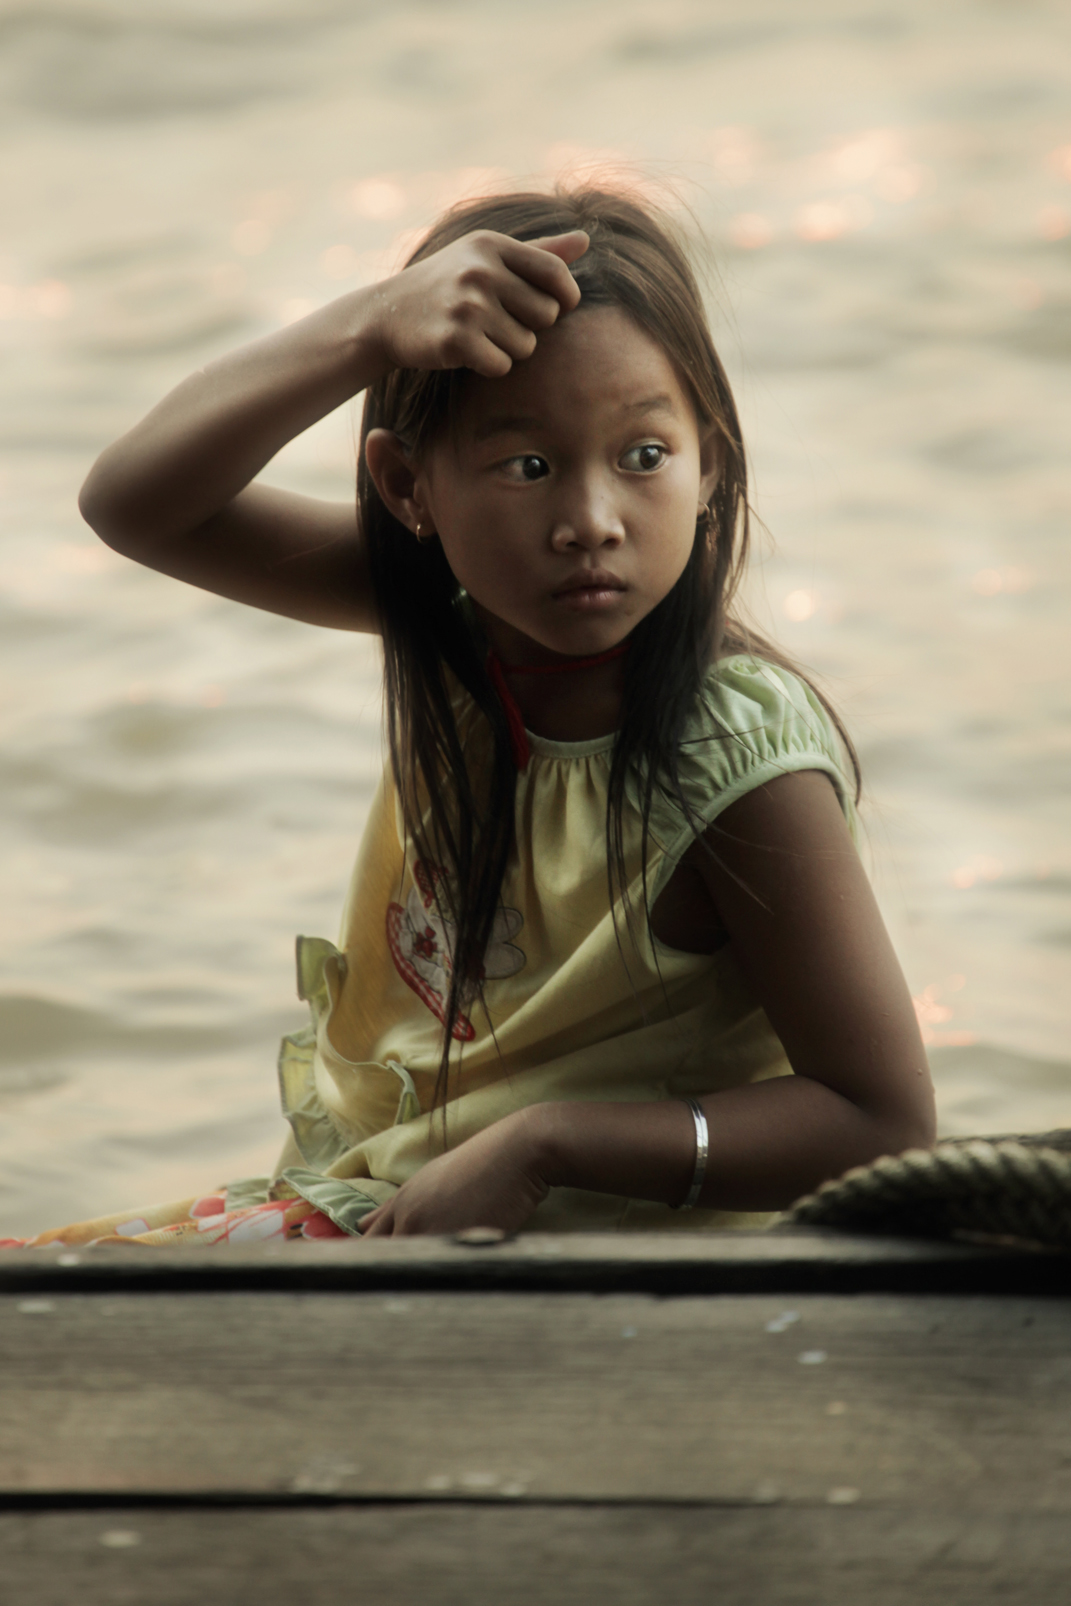 Cambodia  Asia  diego arroyo  photo  Travel portrait spanish photographer amsterdam